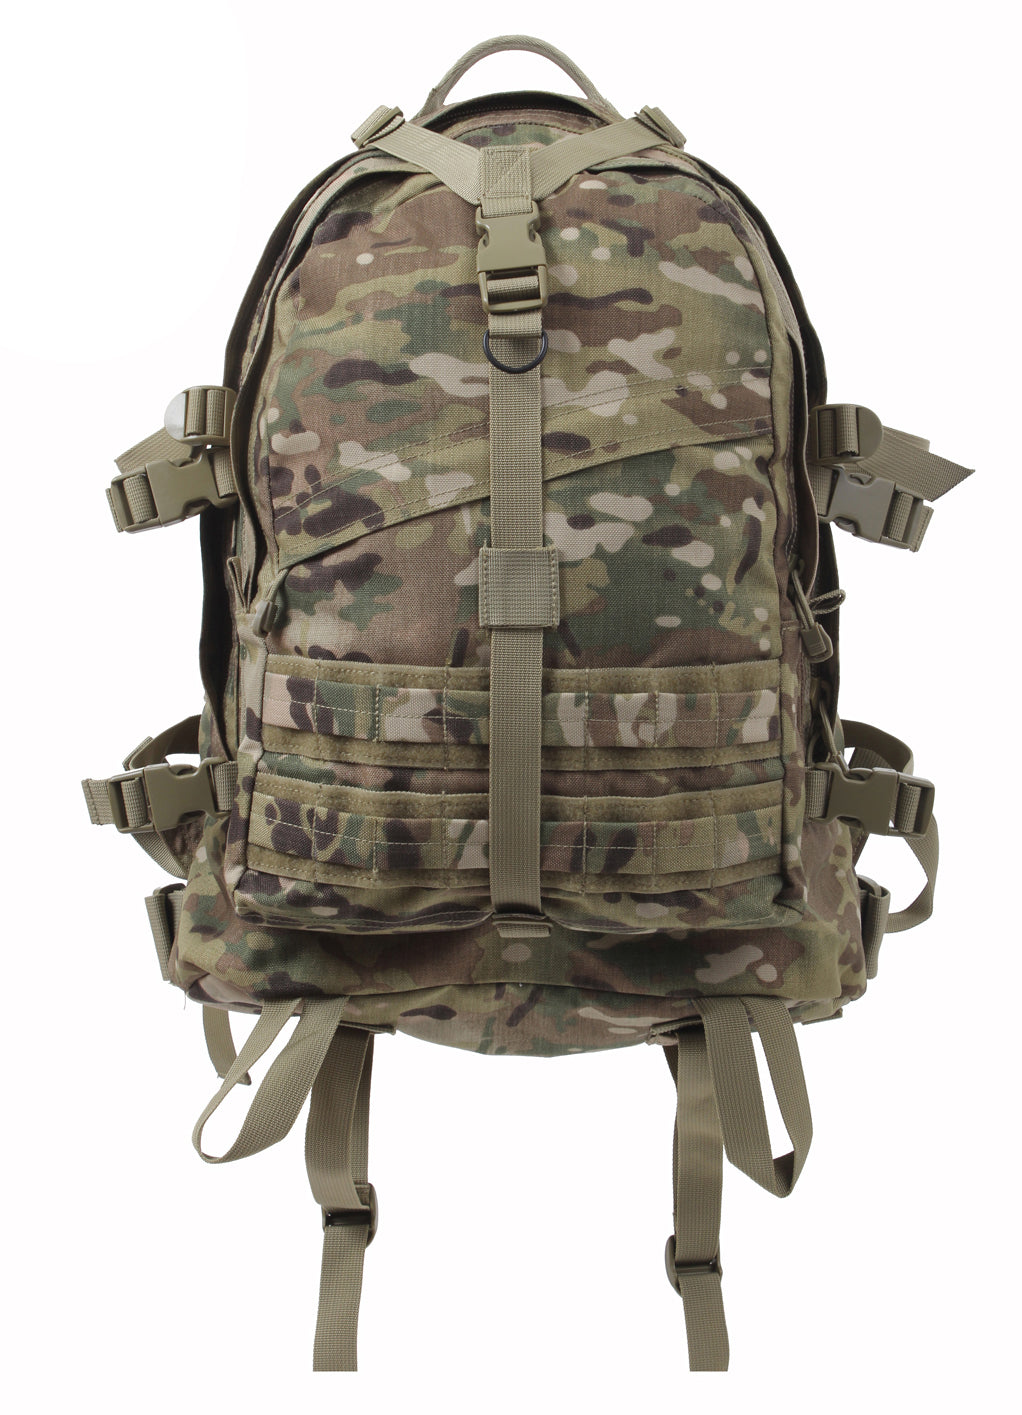 Milspec Large Camo Transport Pack Bug Out Bag Collection MilTac Tactical Military Outdoor Gear Australia